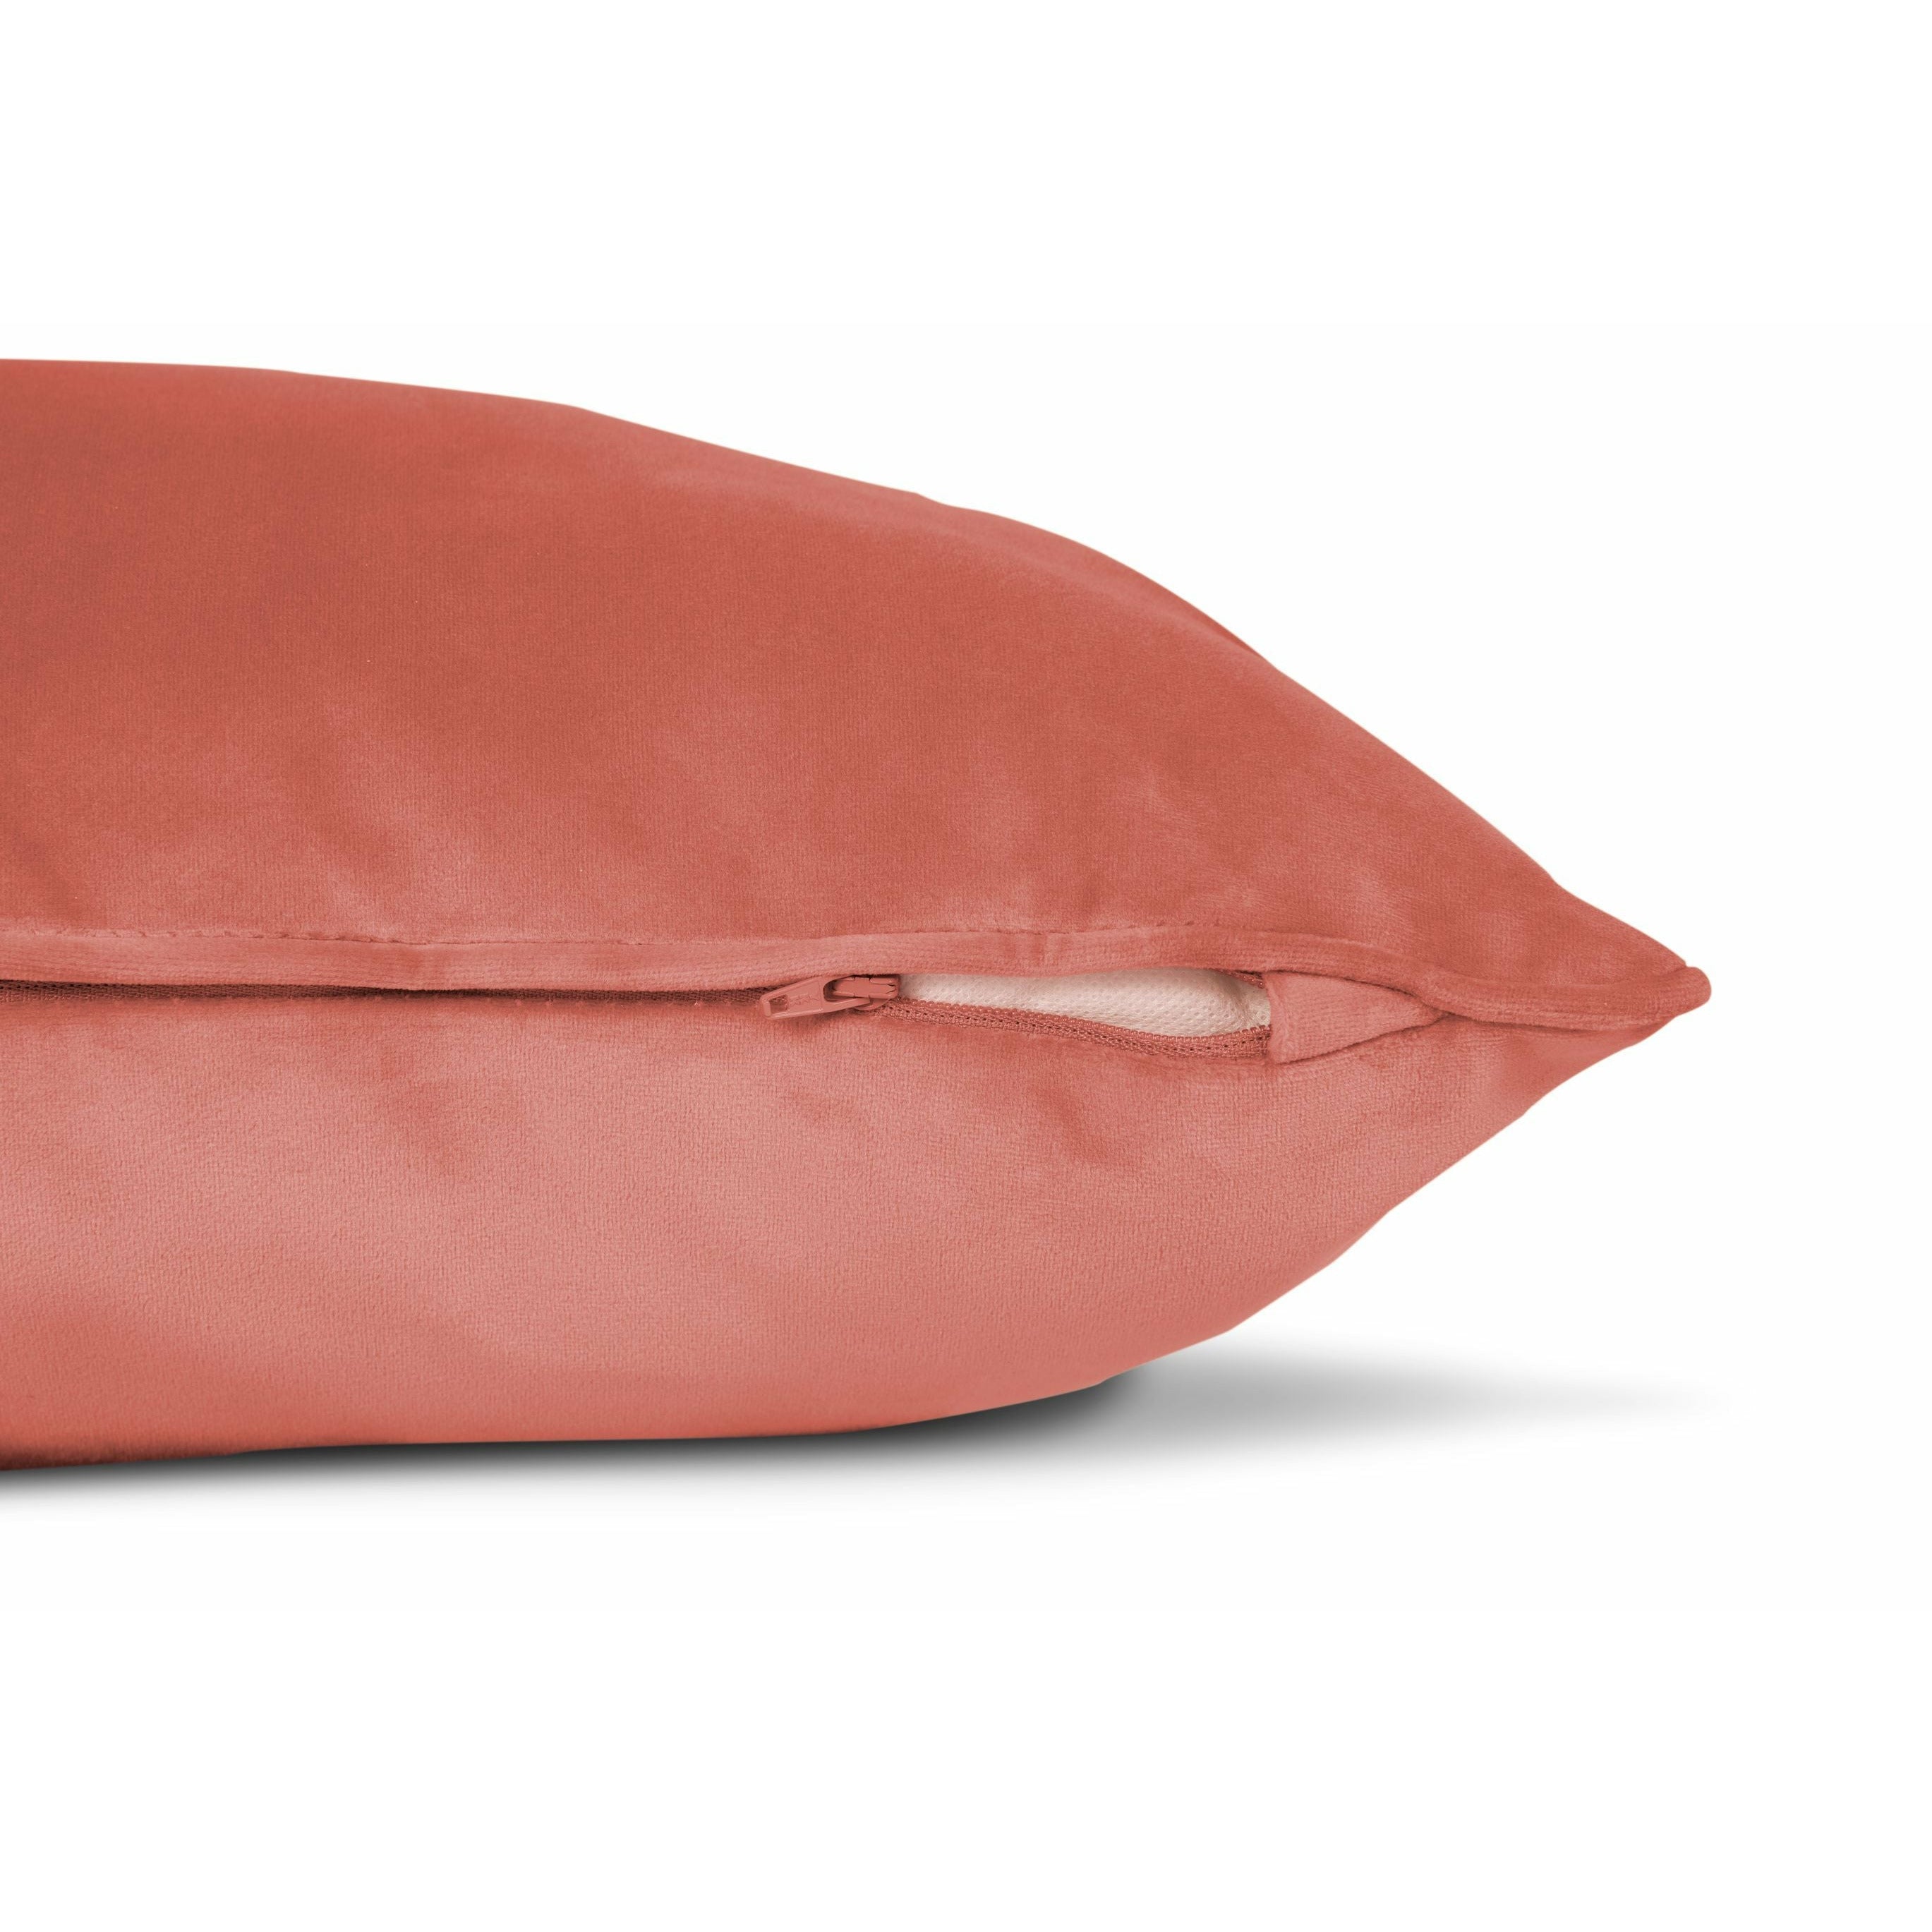 Fatboy Square Velvet Cushion Recycled 50x50 Cm, Rhubarb